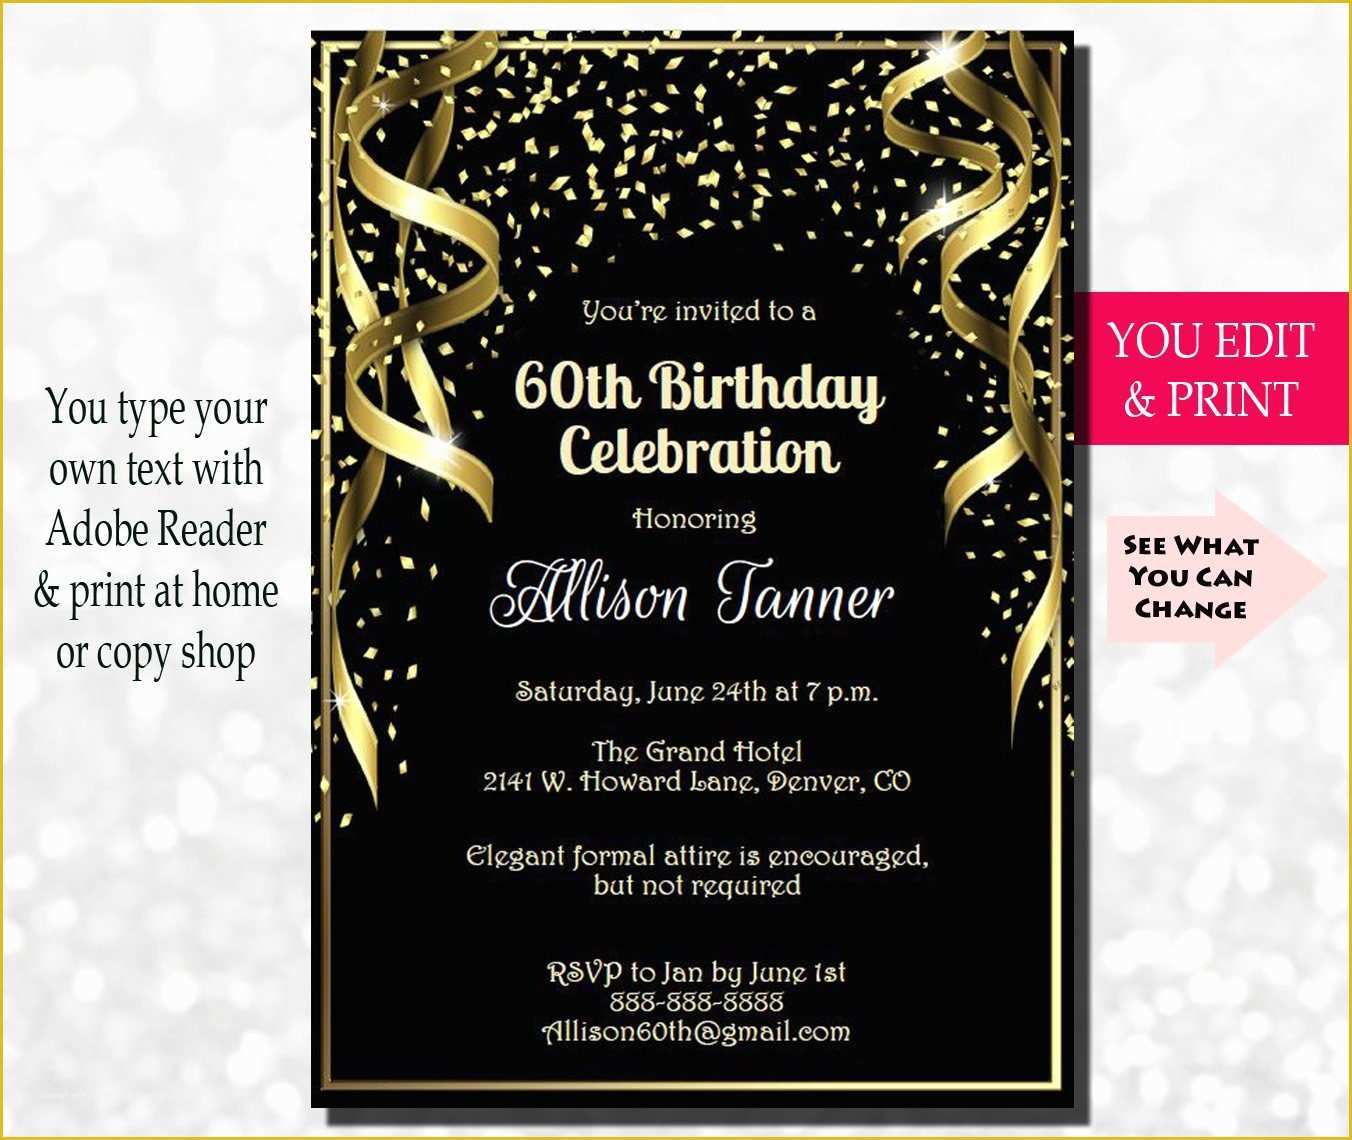 60th Birthday Party Invitation Templates Free Download Of 60th Birthday Invitation 60th Birthday Party Invitation 60th